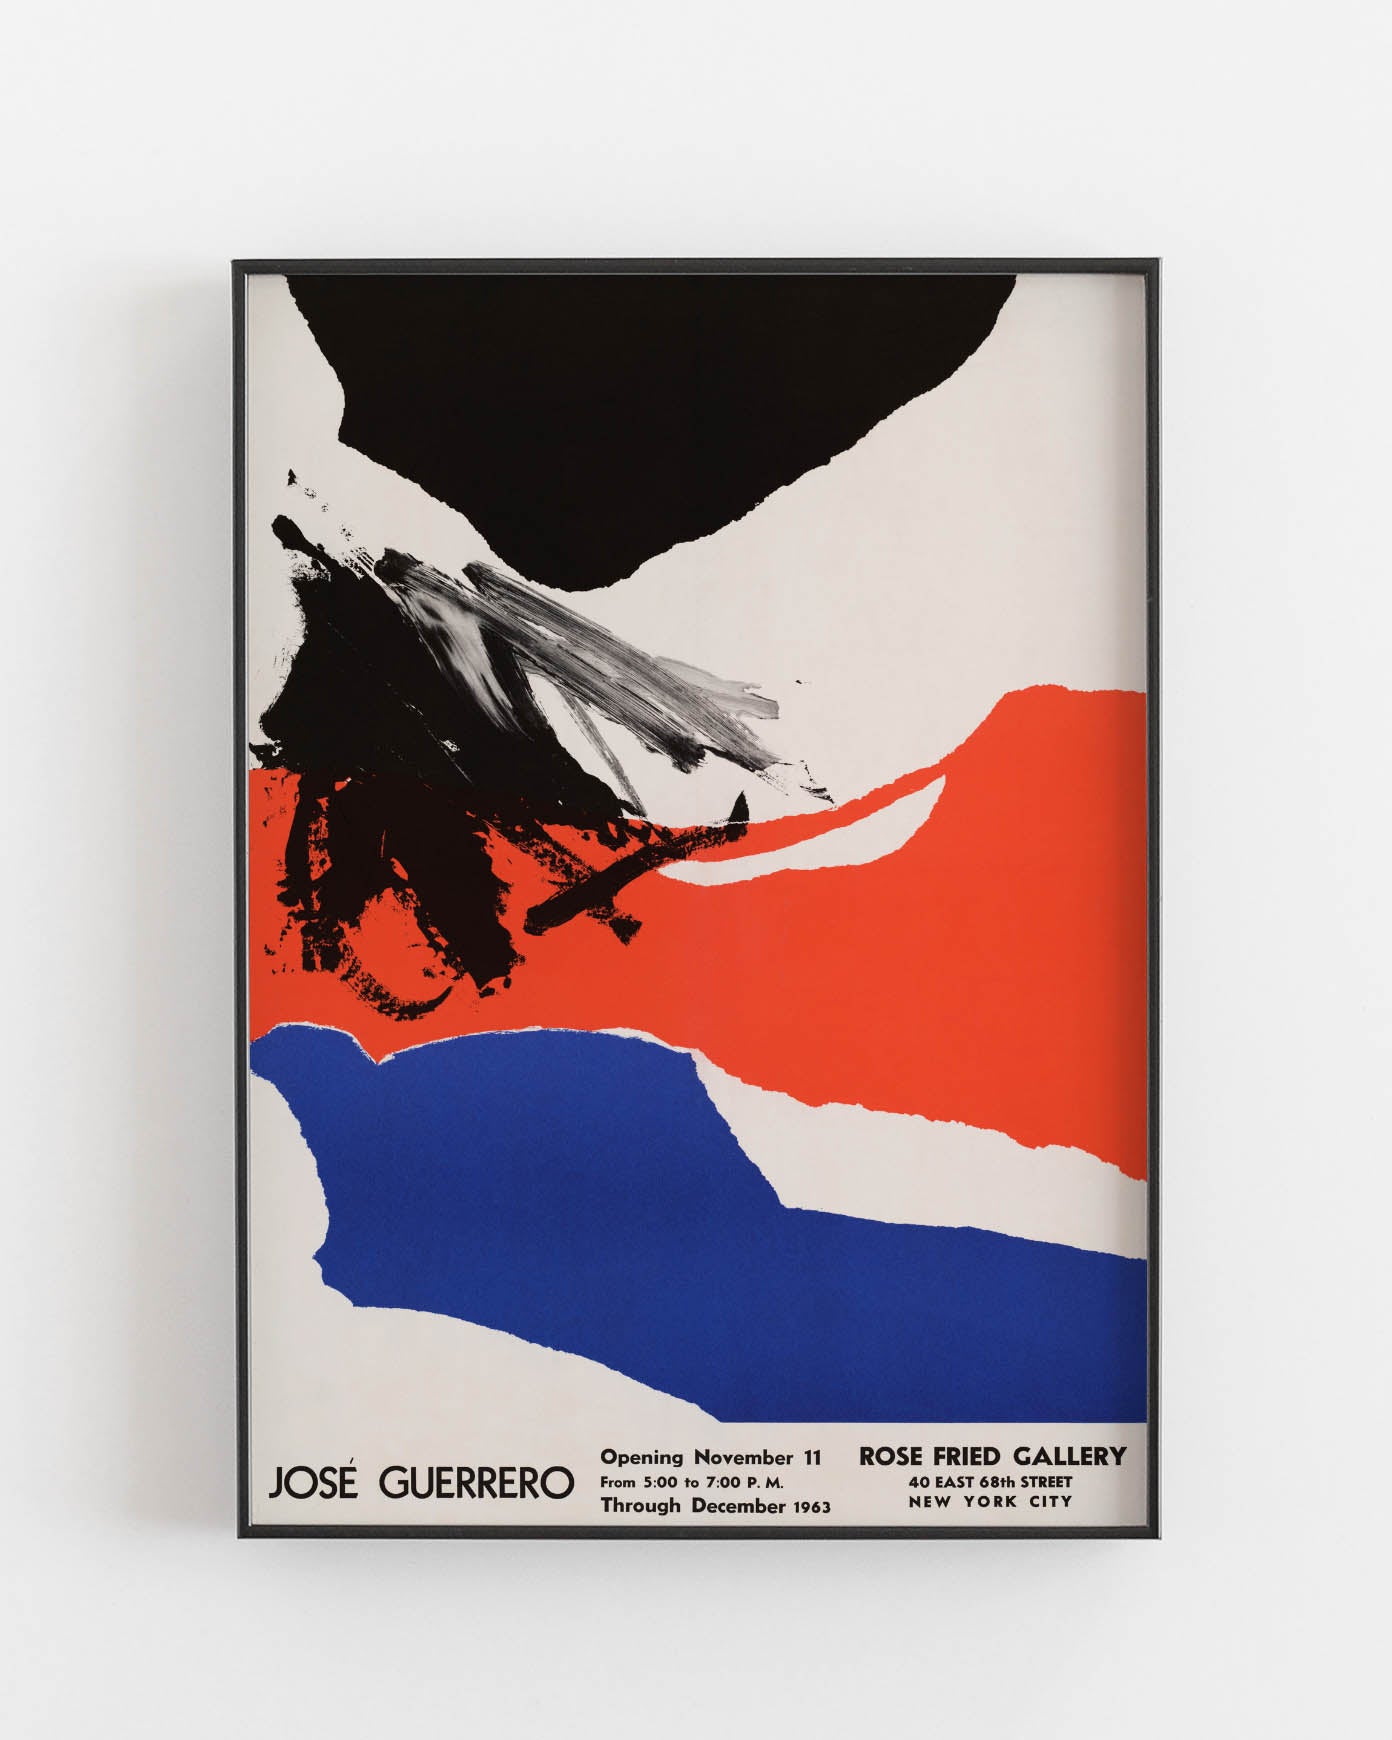 Jose Guerrero exhibition poster